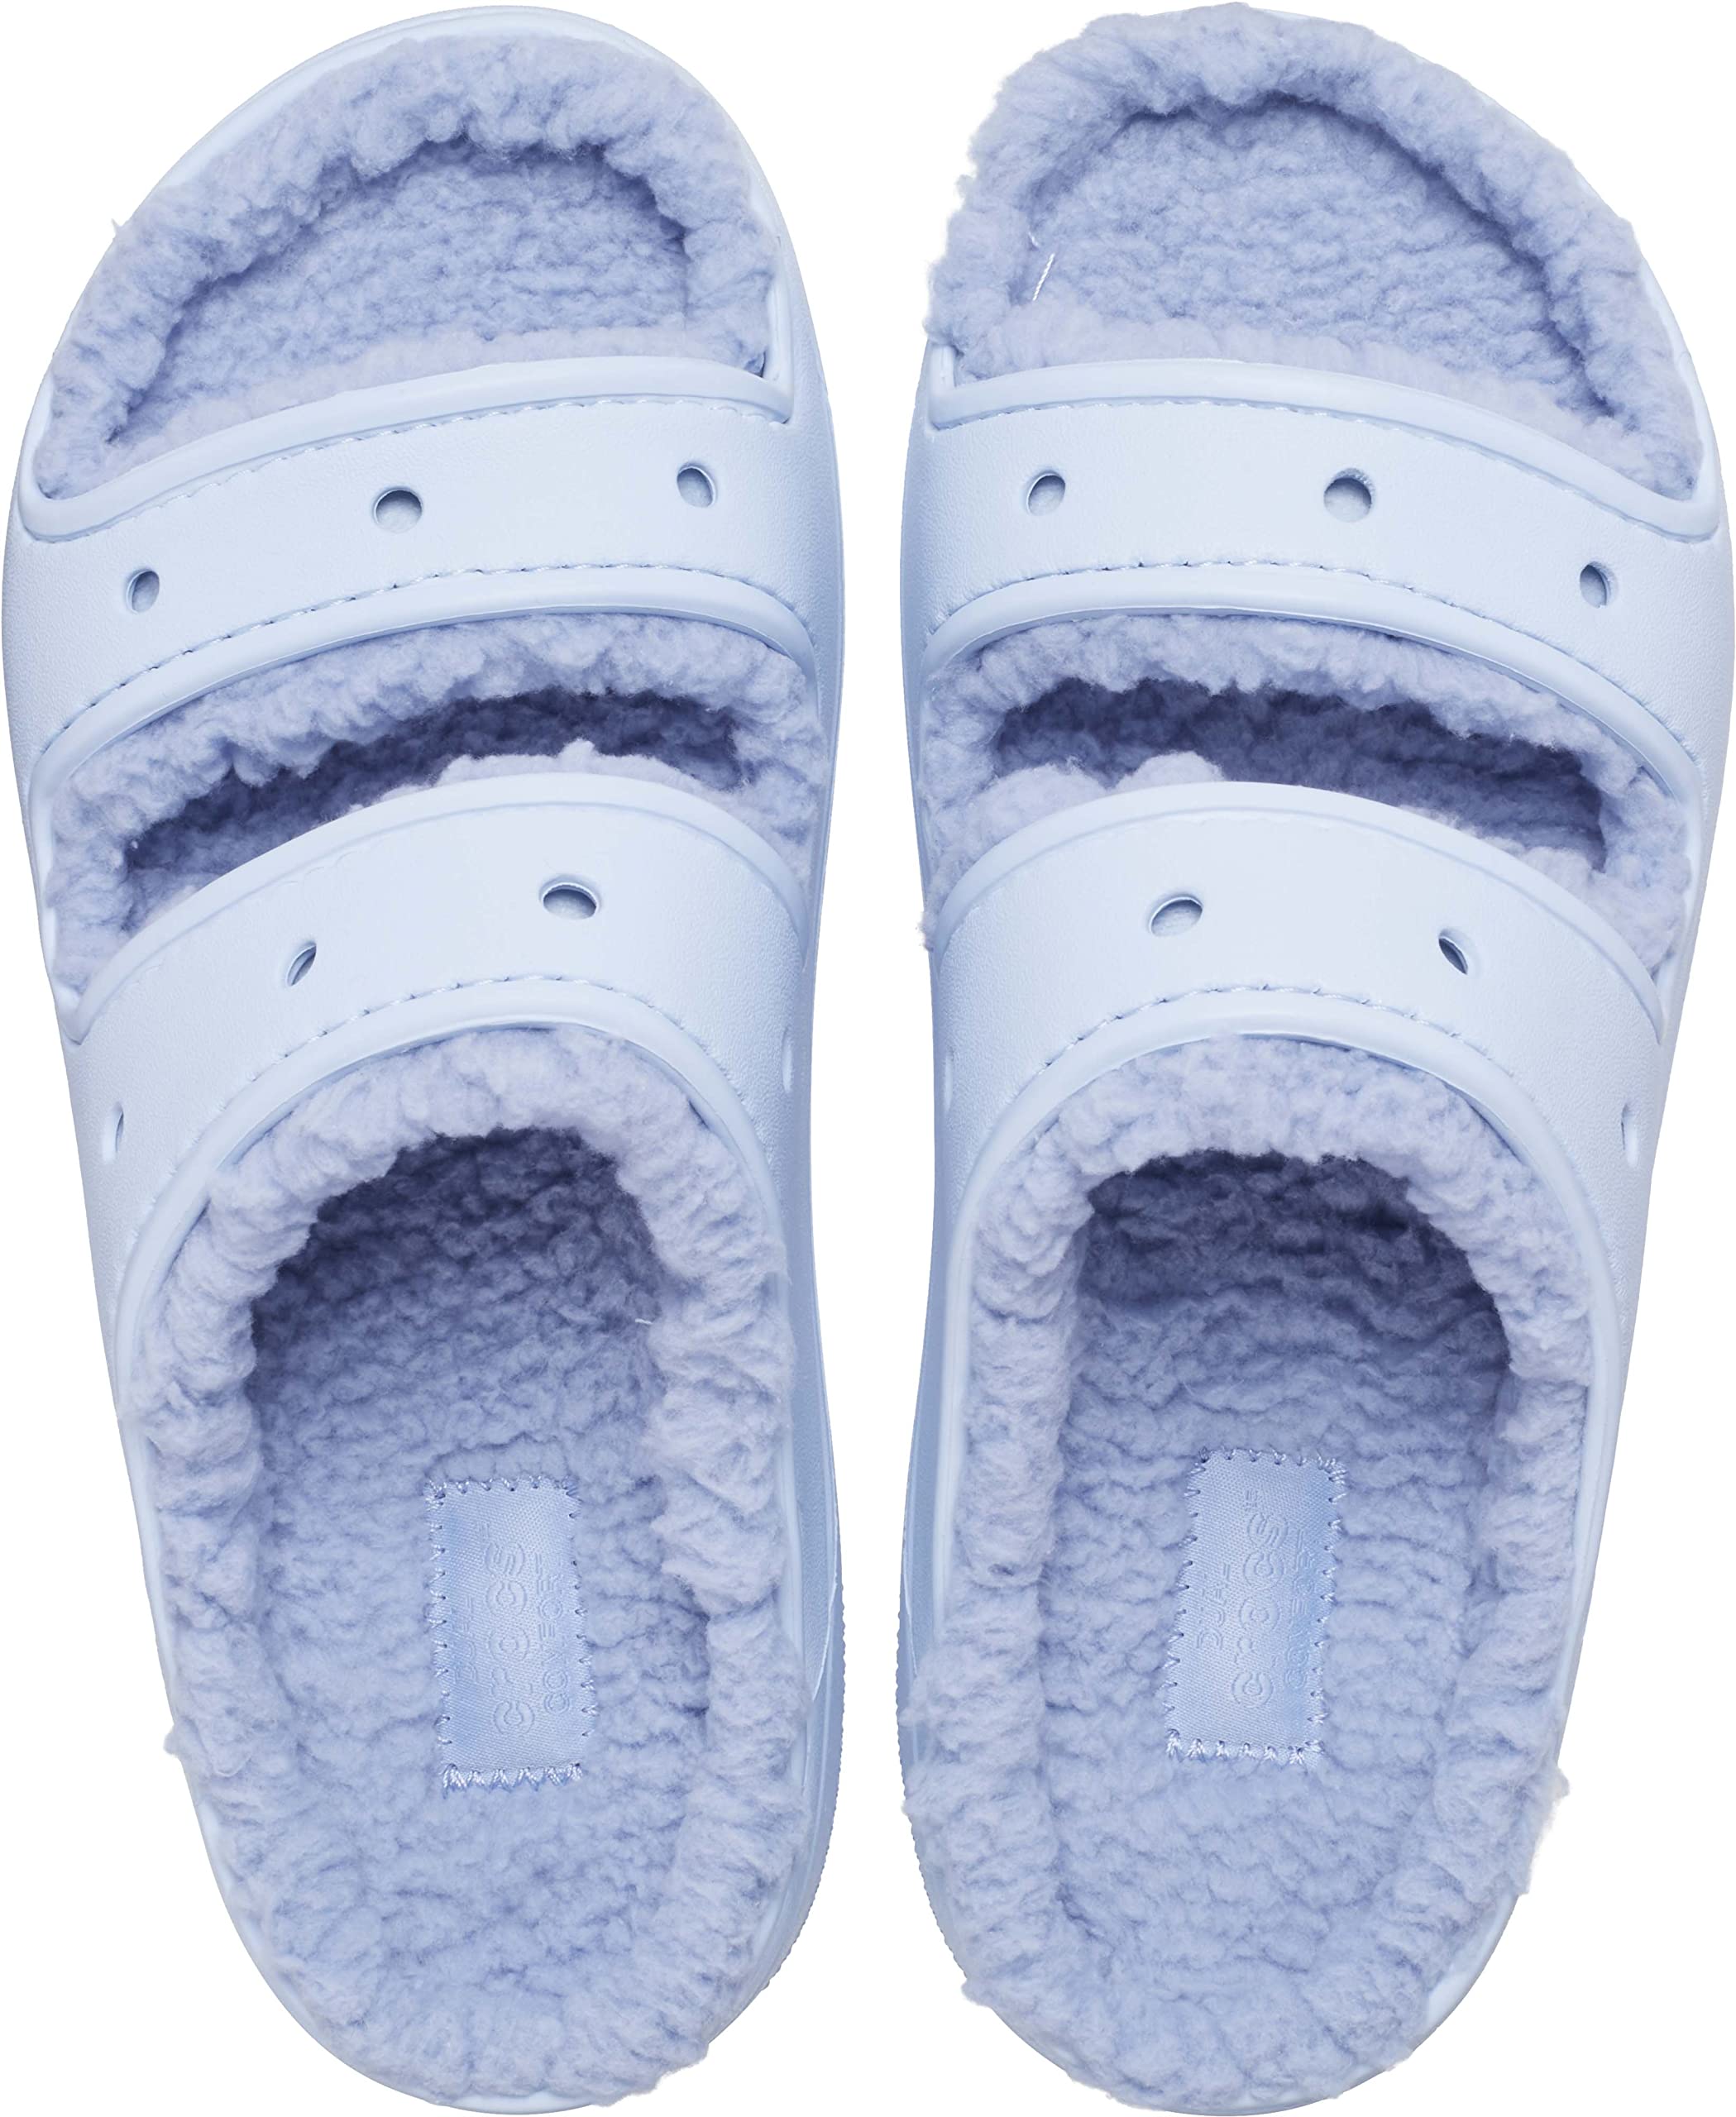 Crocs Unisex-Adult Lined Sandal